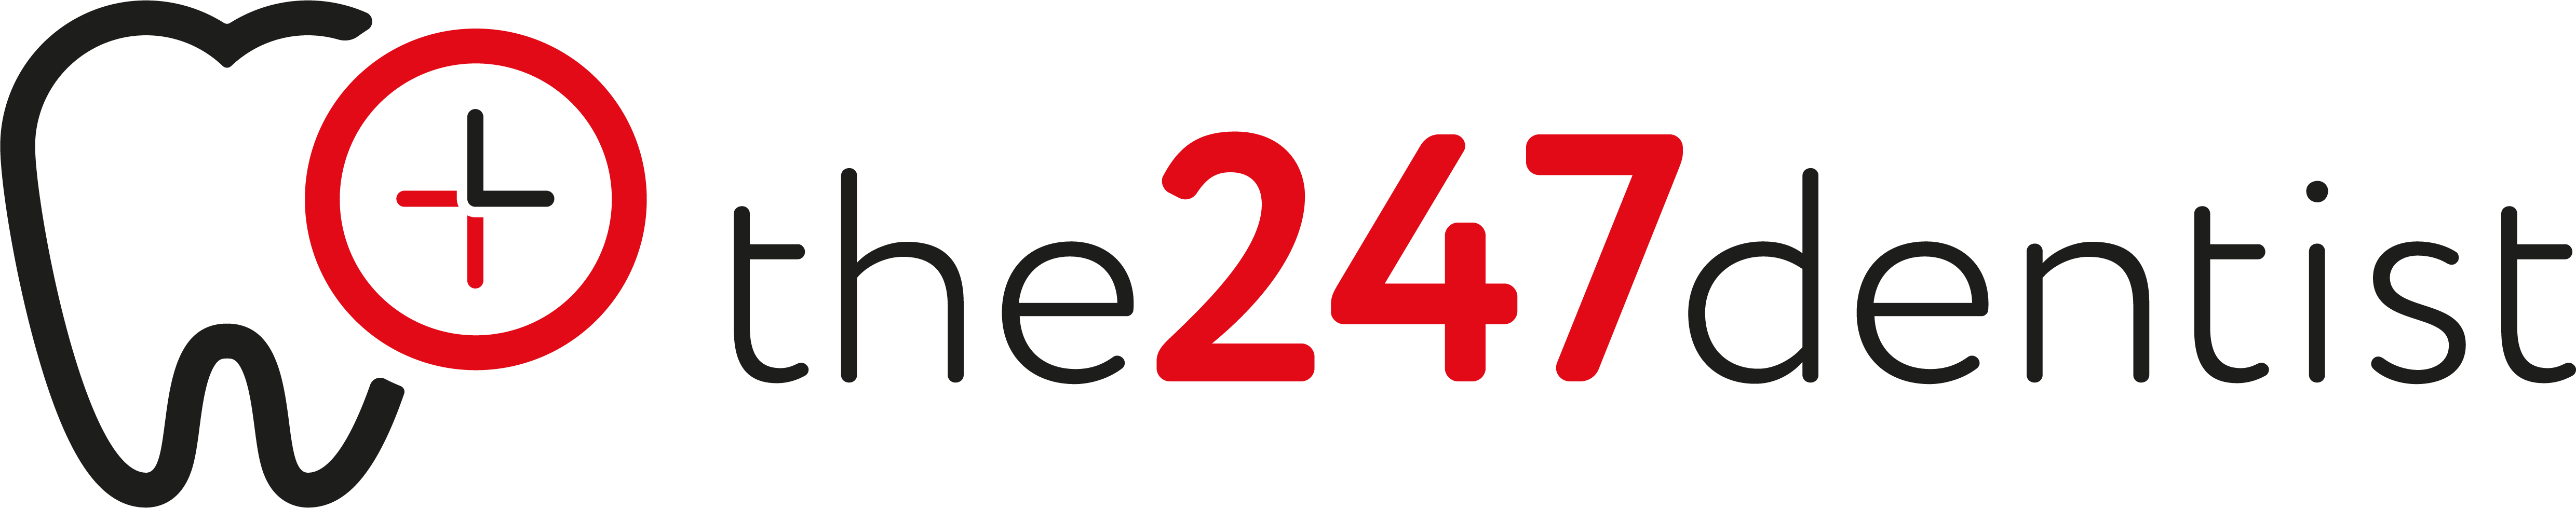 the 247 dentist logo on transparent background